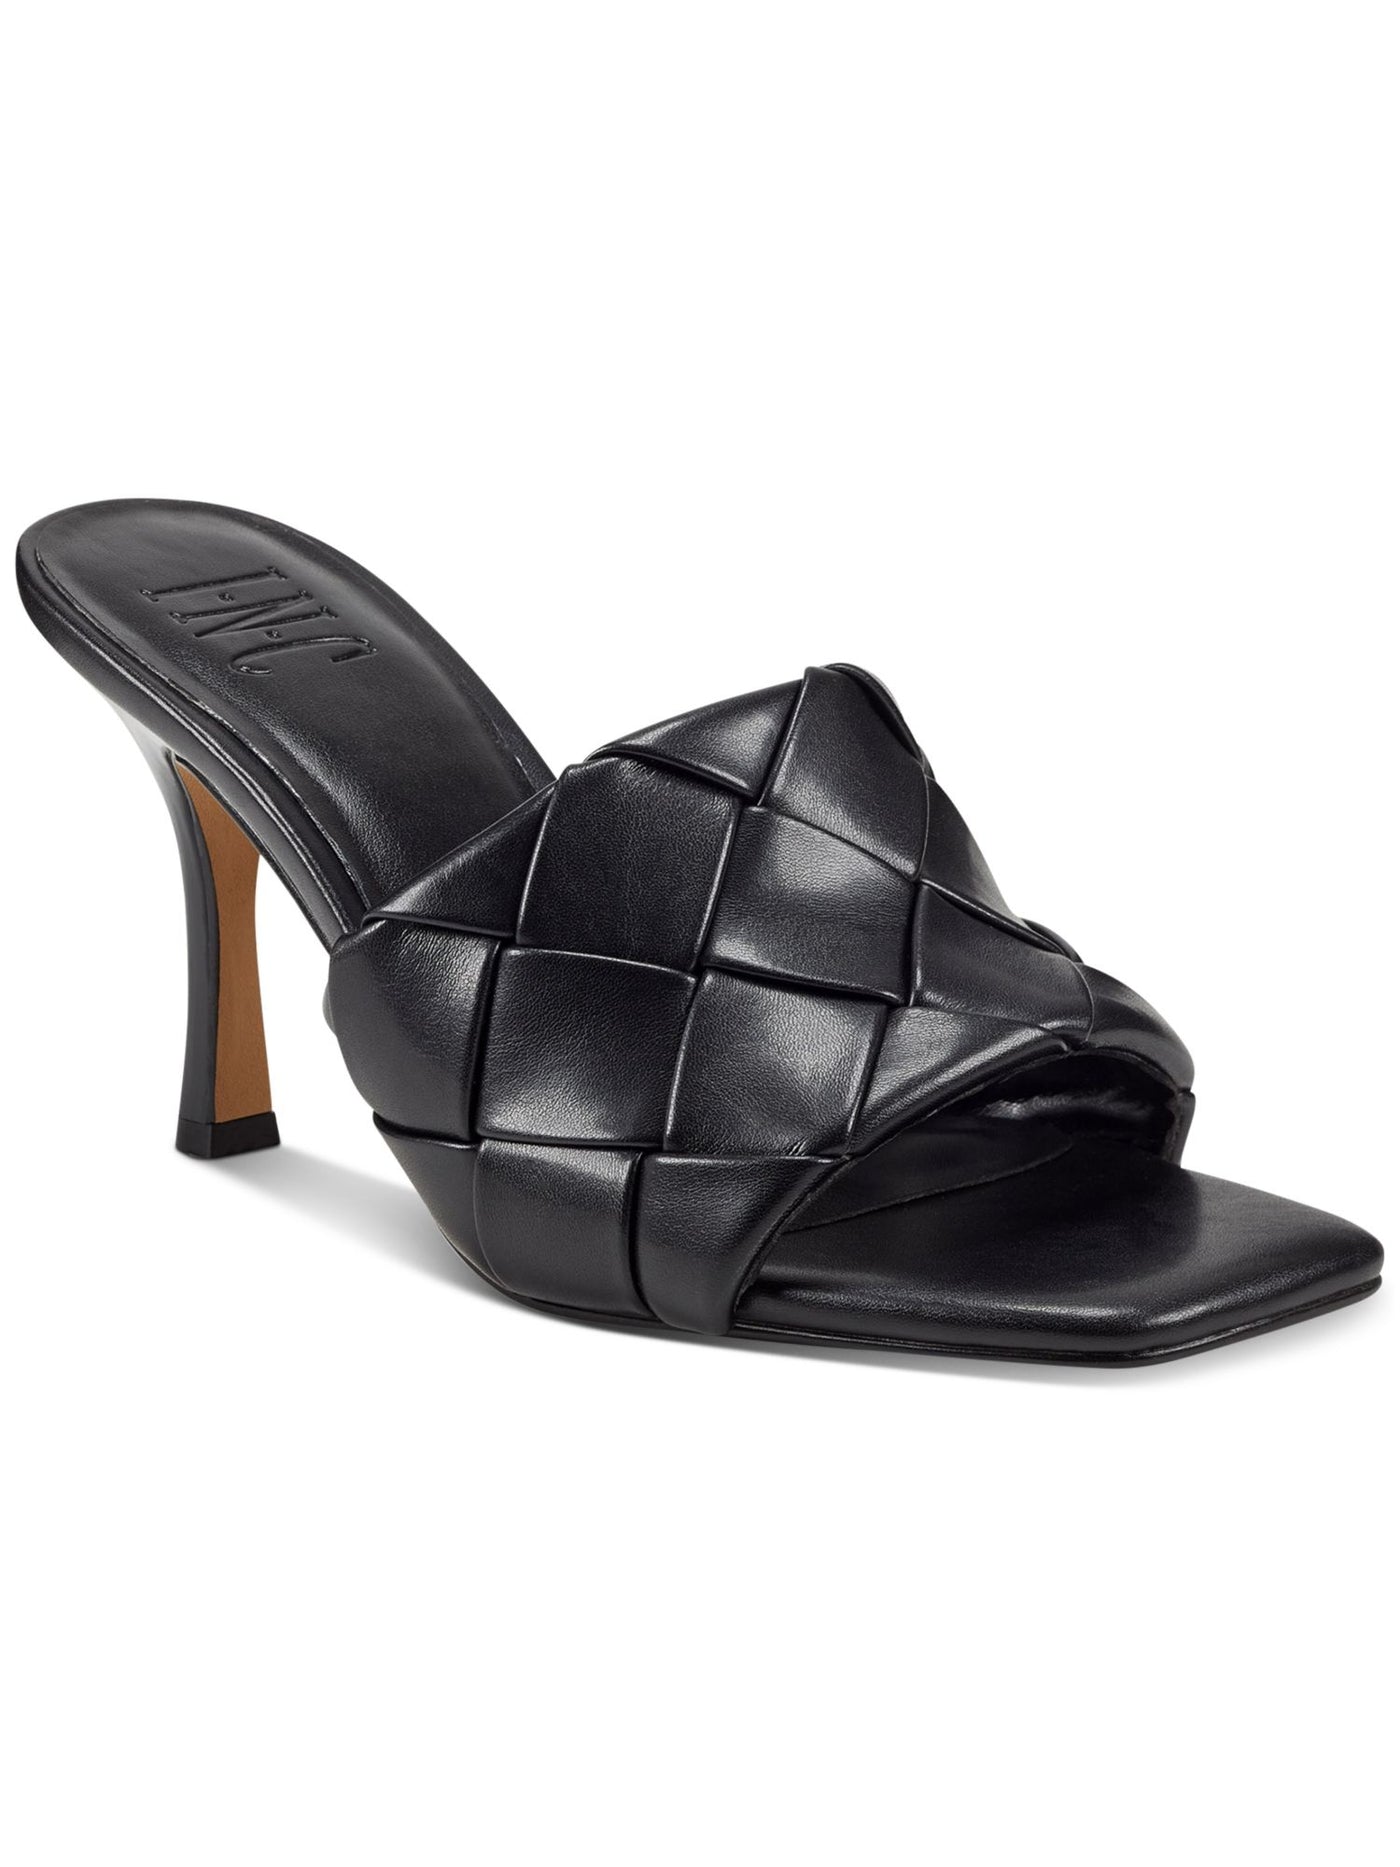 INC Womens Black Woven Cushioned Liah Square Toe Stiletto Slip On Dress Sandals Shoes 6 M